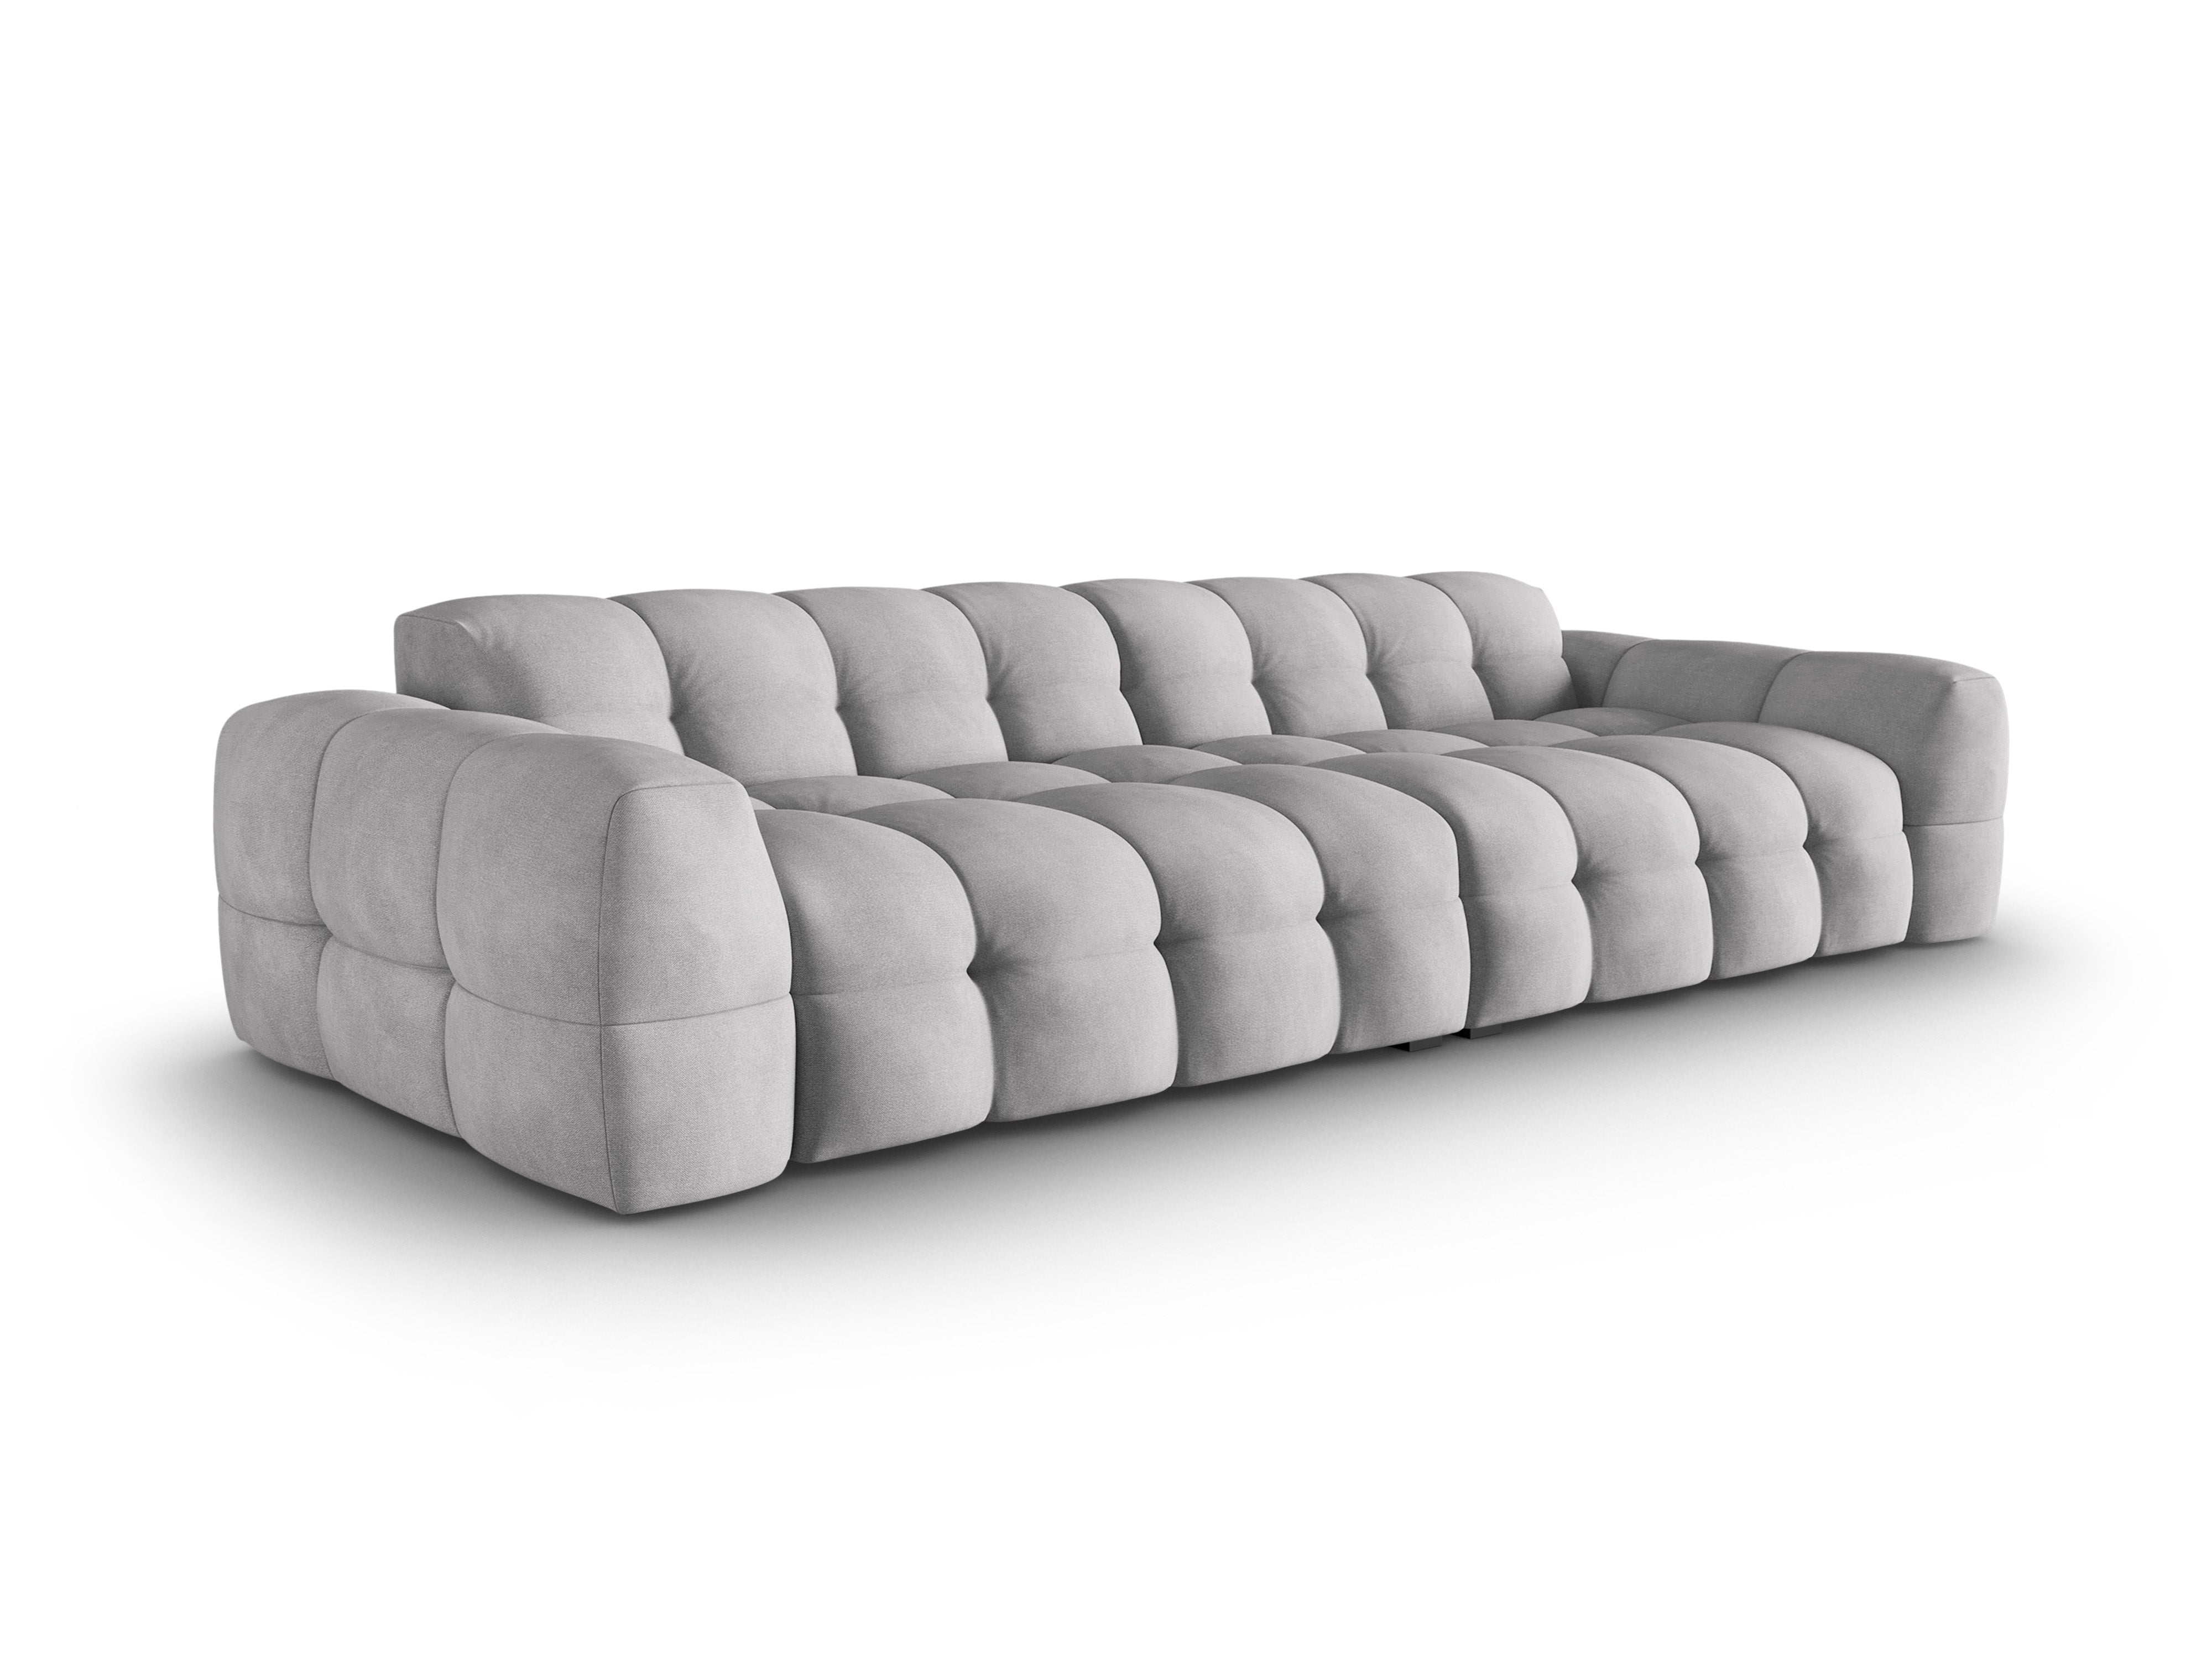 Sofa, "Nino", 4 Seats, 282x105x68
Made in Europe, Maison Heritage, Eye on Design